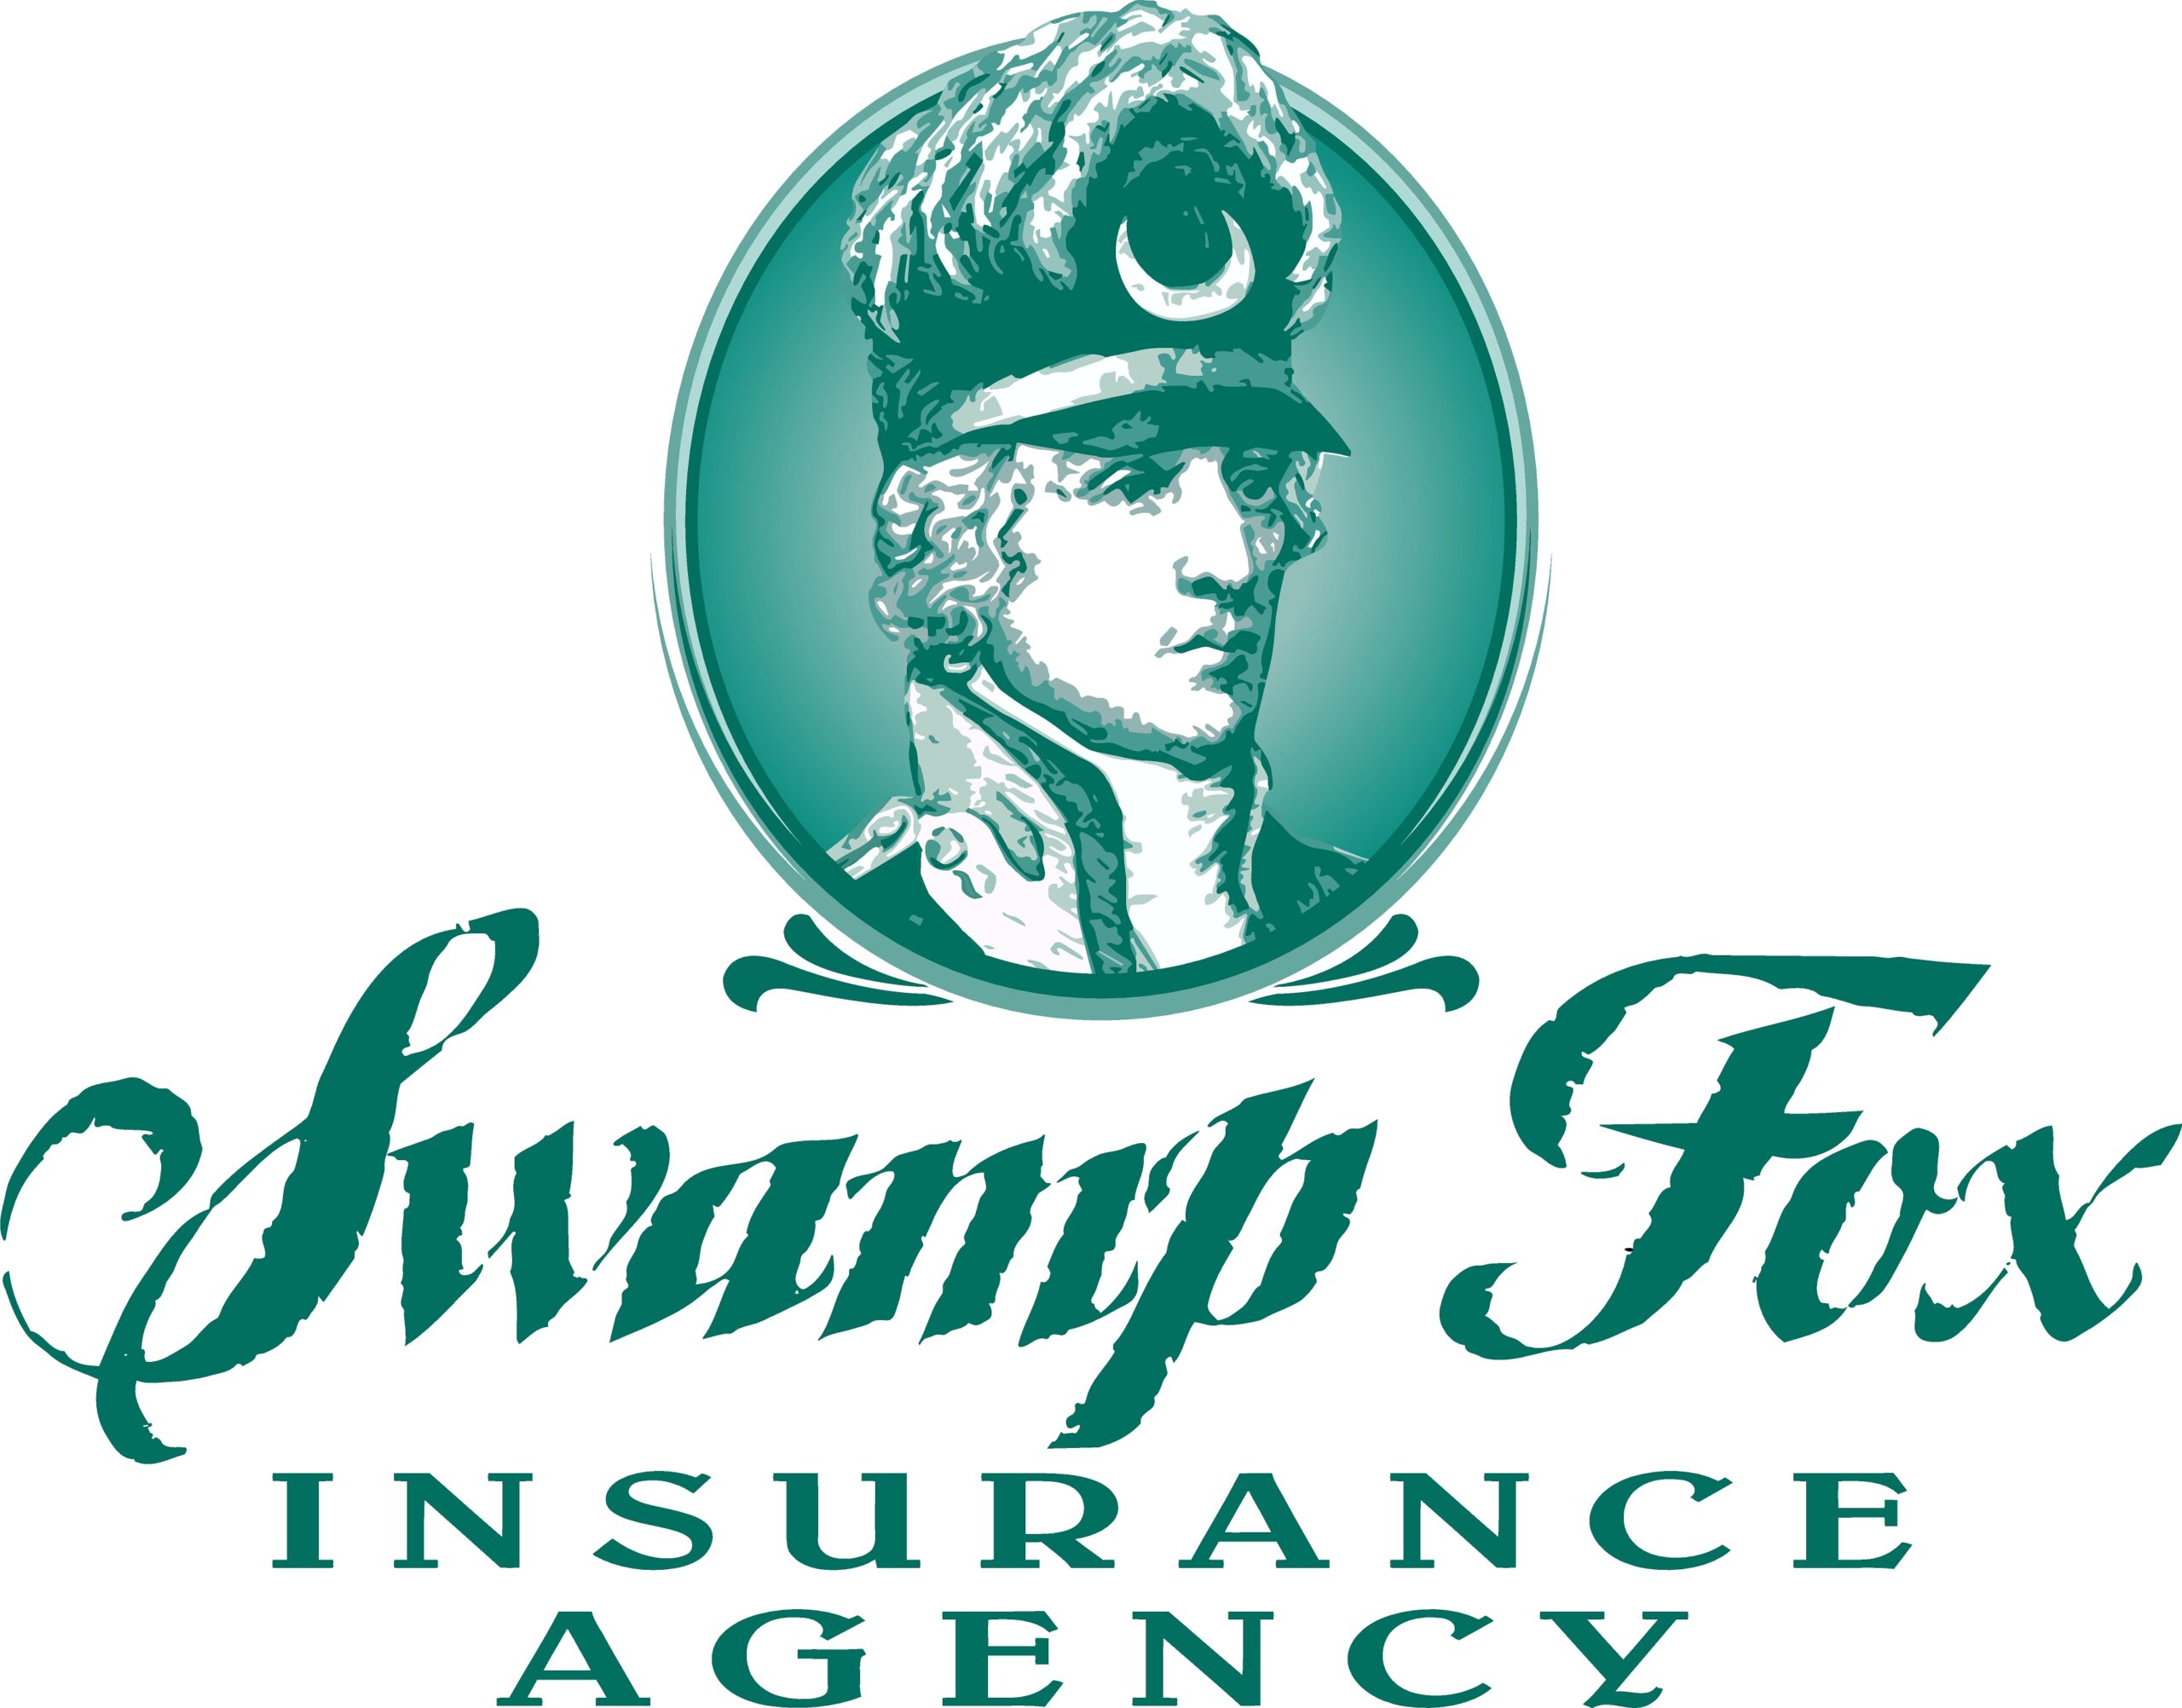 Swamp Fox Agency